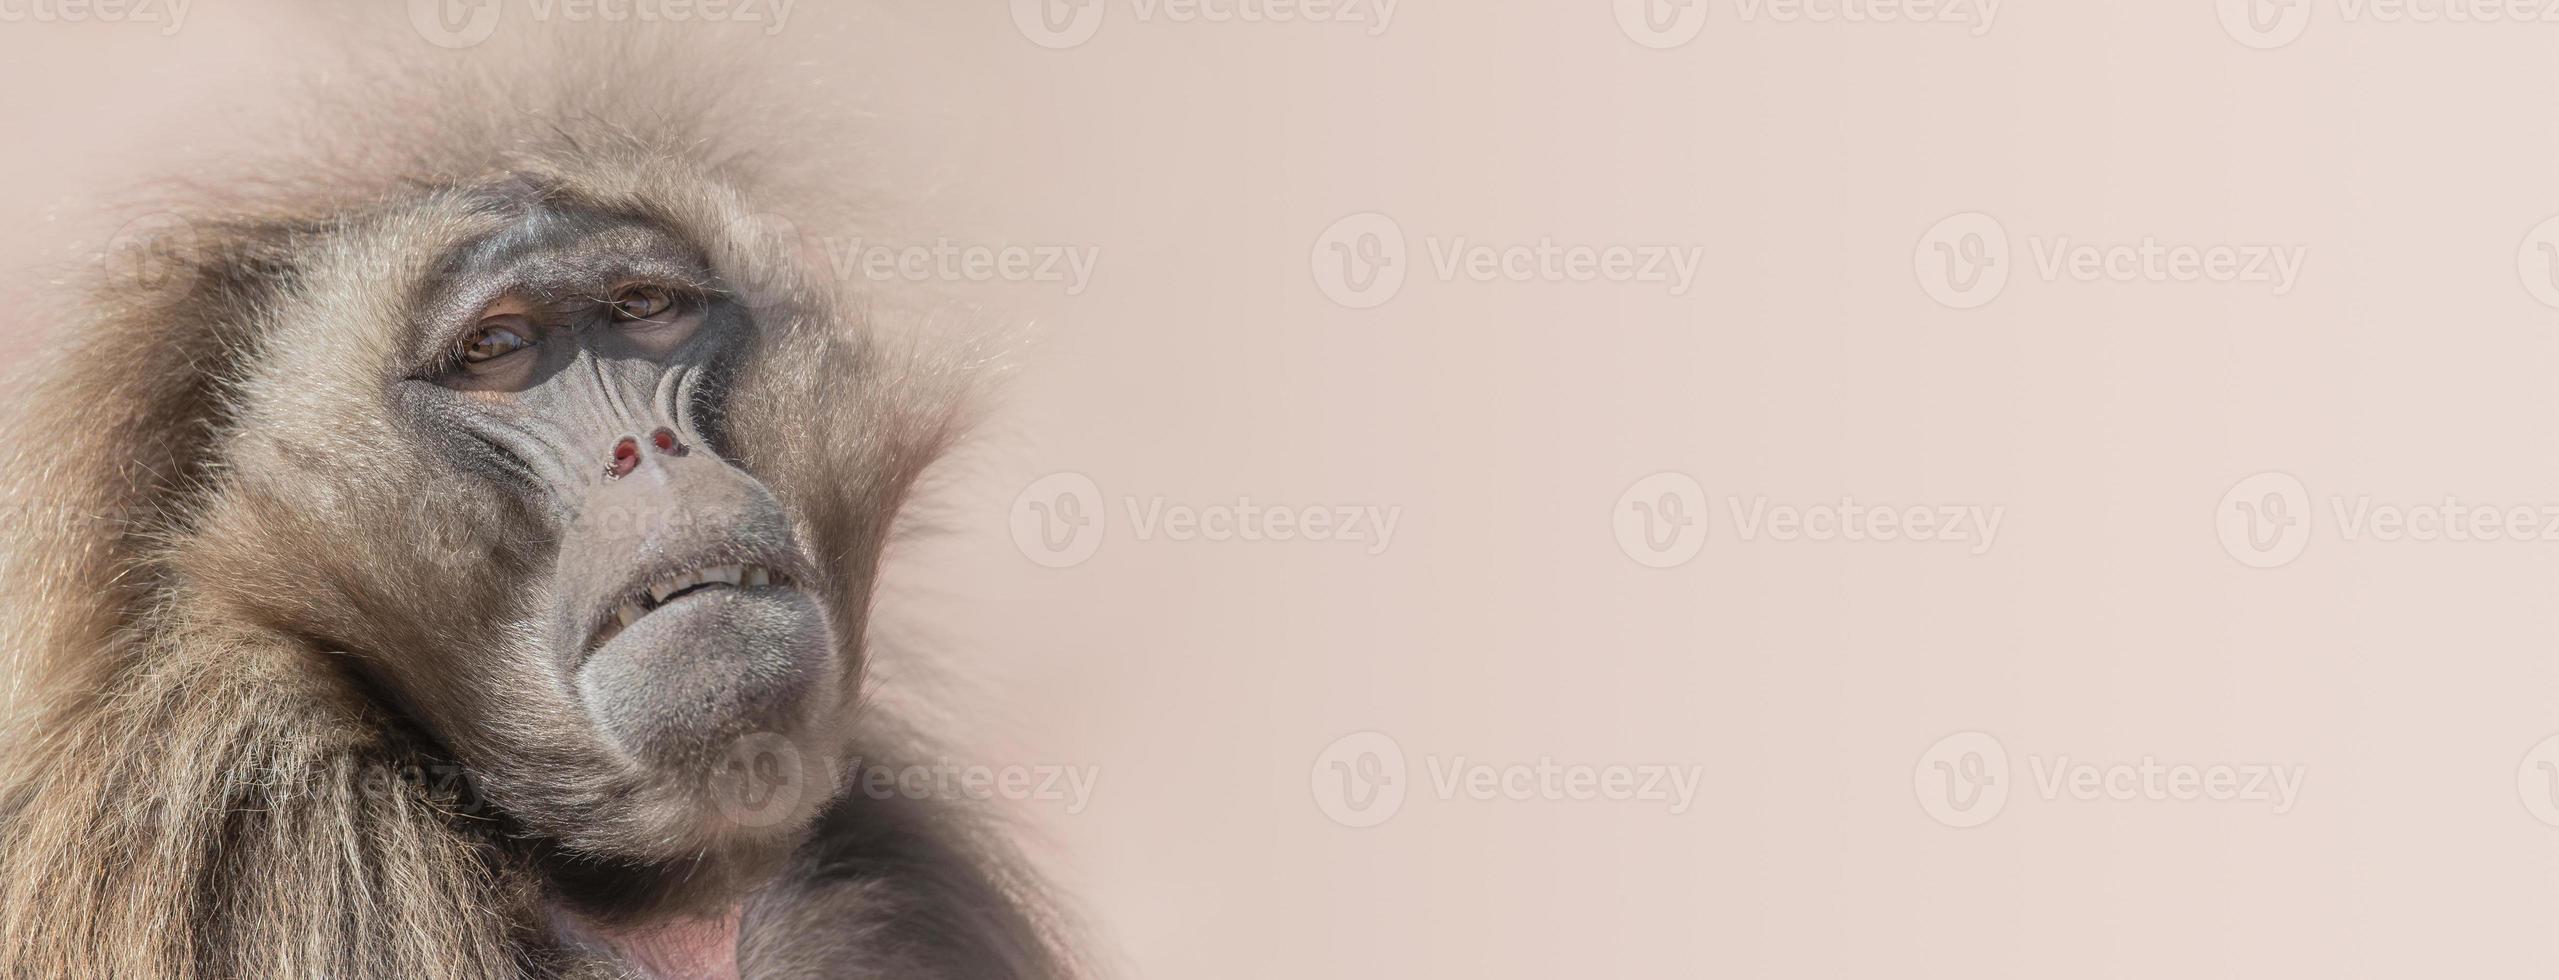 portret van depressieve Afrikaanse baviaan op gladde achtergrond foto